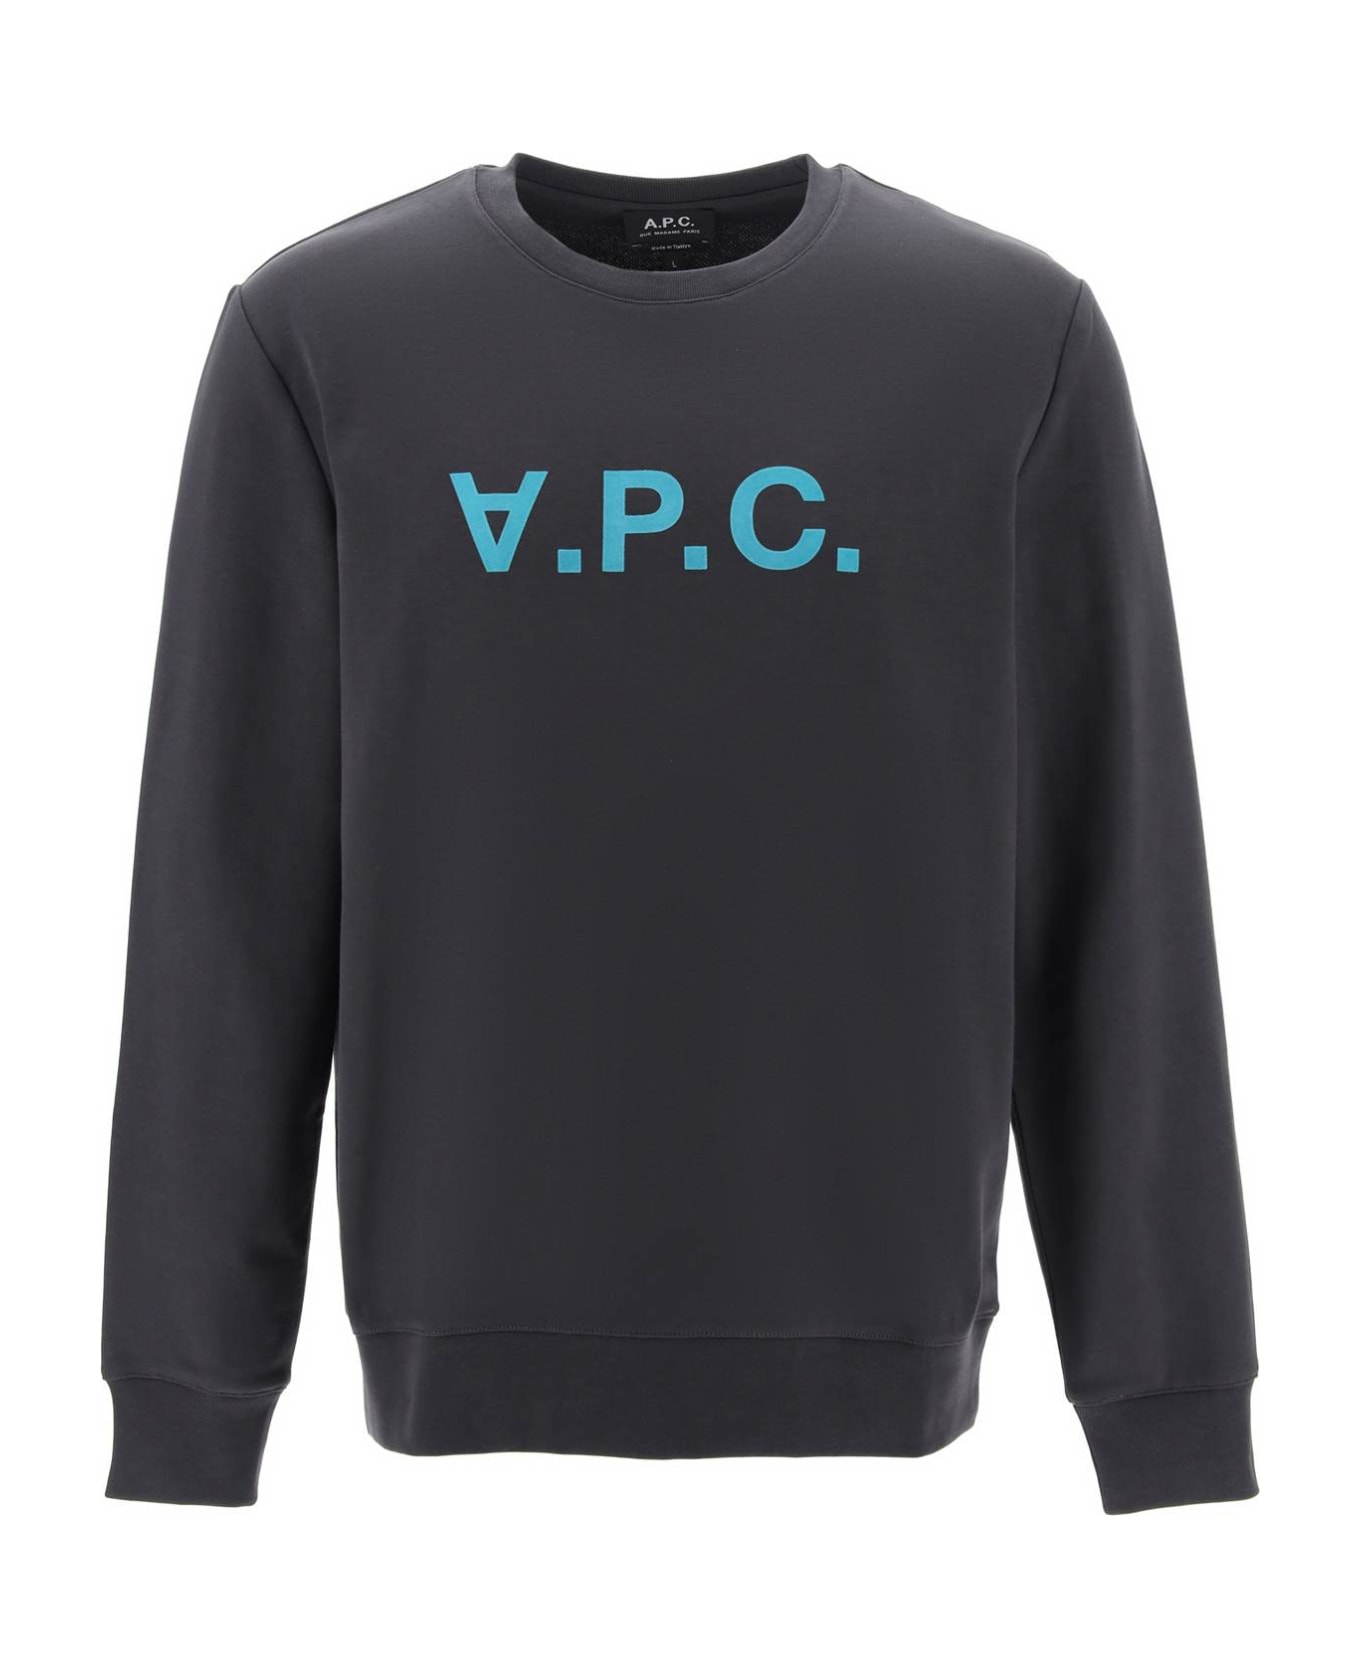 A.P.C. Flock V.p.c. Logo Sweatshirt - ANTHRACITE (Grey)